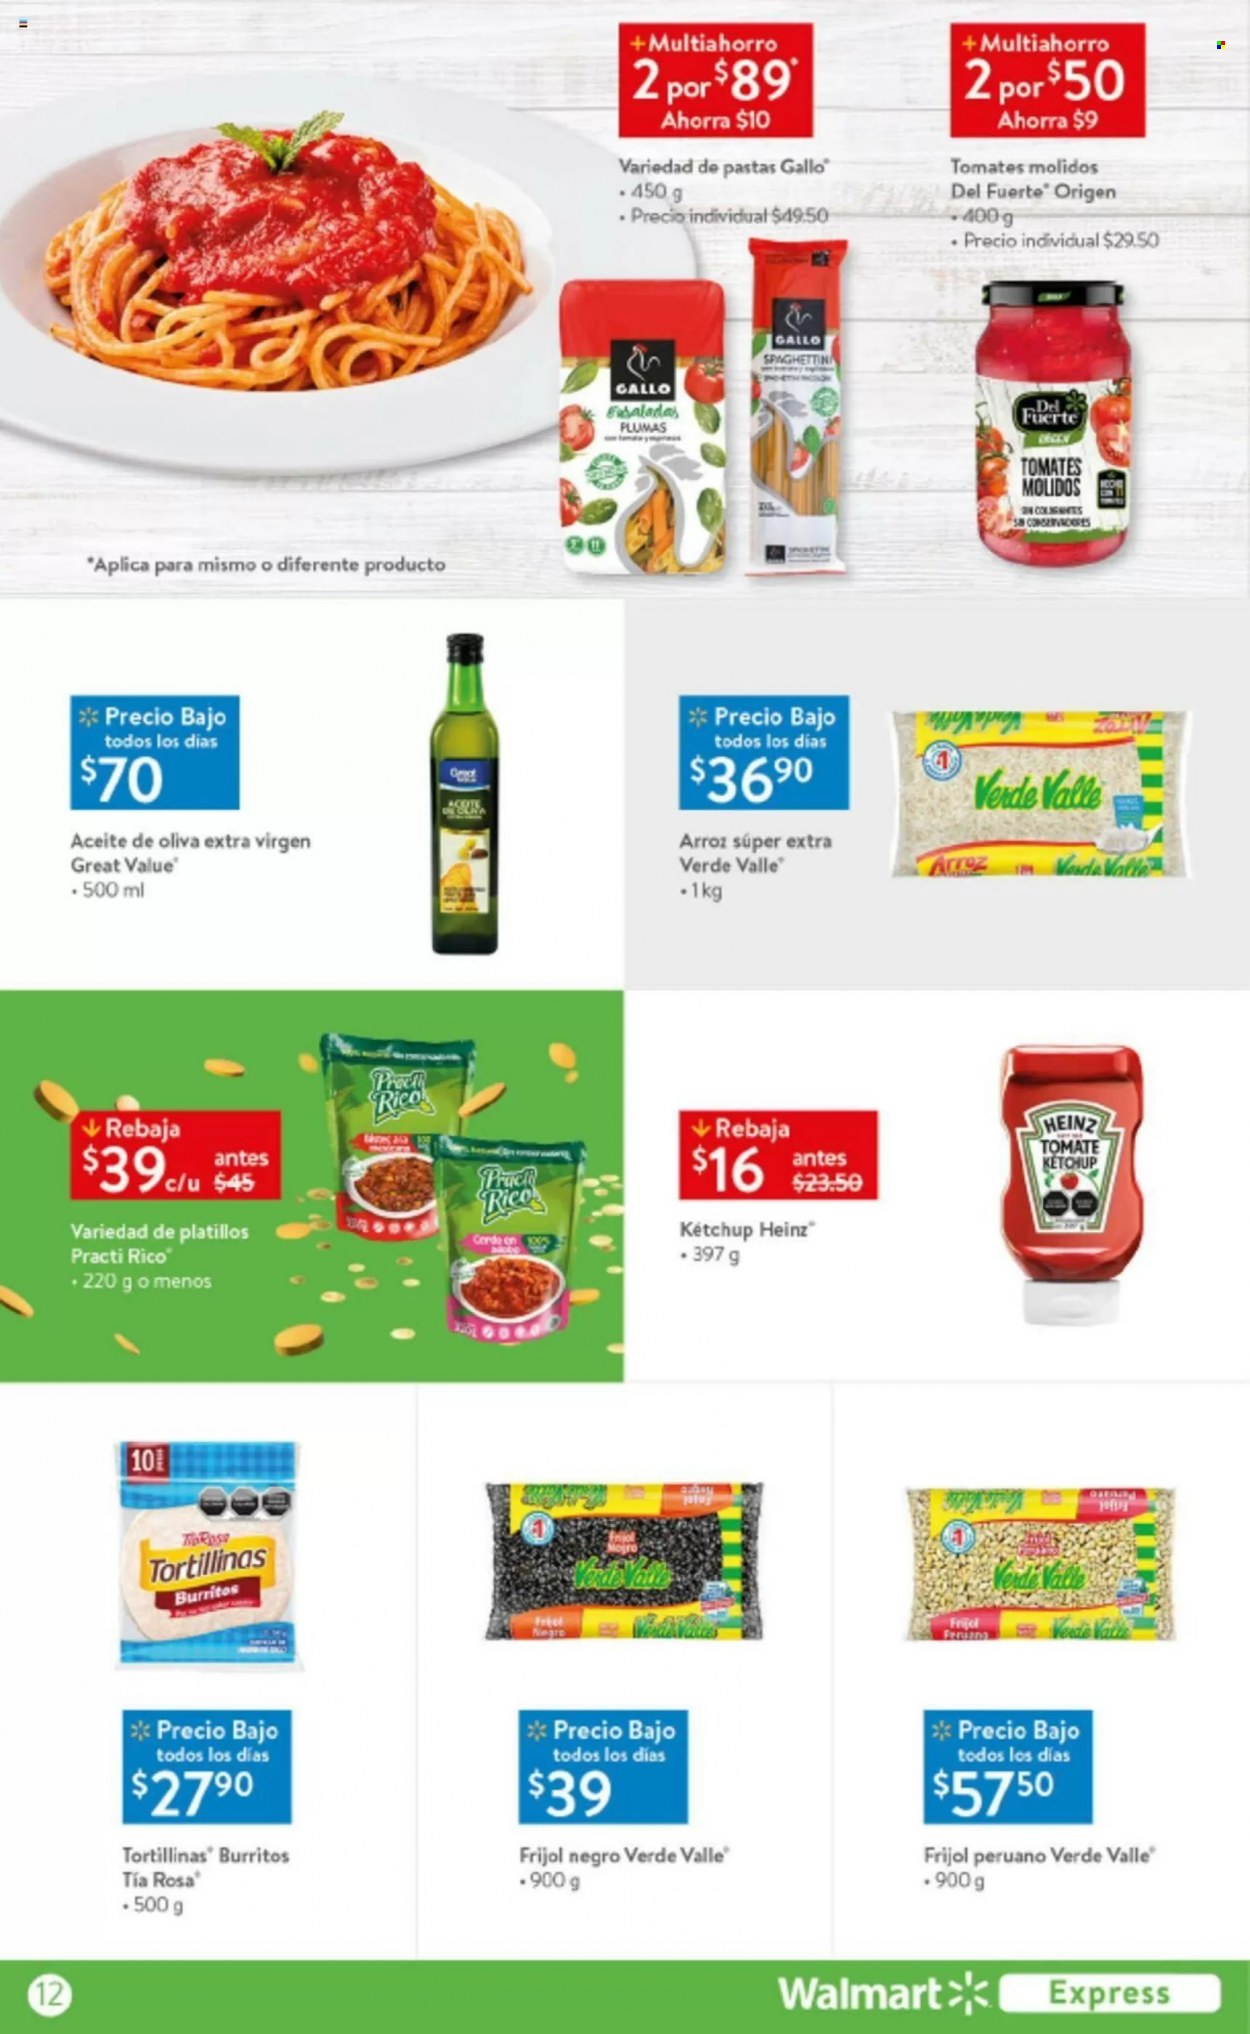 thumbnail - Folleto actual Walmart Express - 23.5.2022 - 31.5.2022 - Ventas - Heinz, frijol, pasta, arroz, ketchup, aceite de oliva, aceite de oliva extra virgen. Página 12.